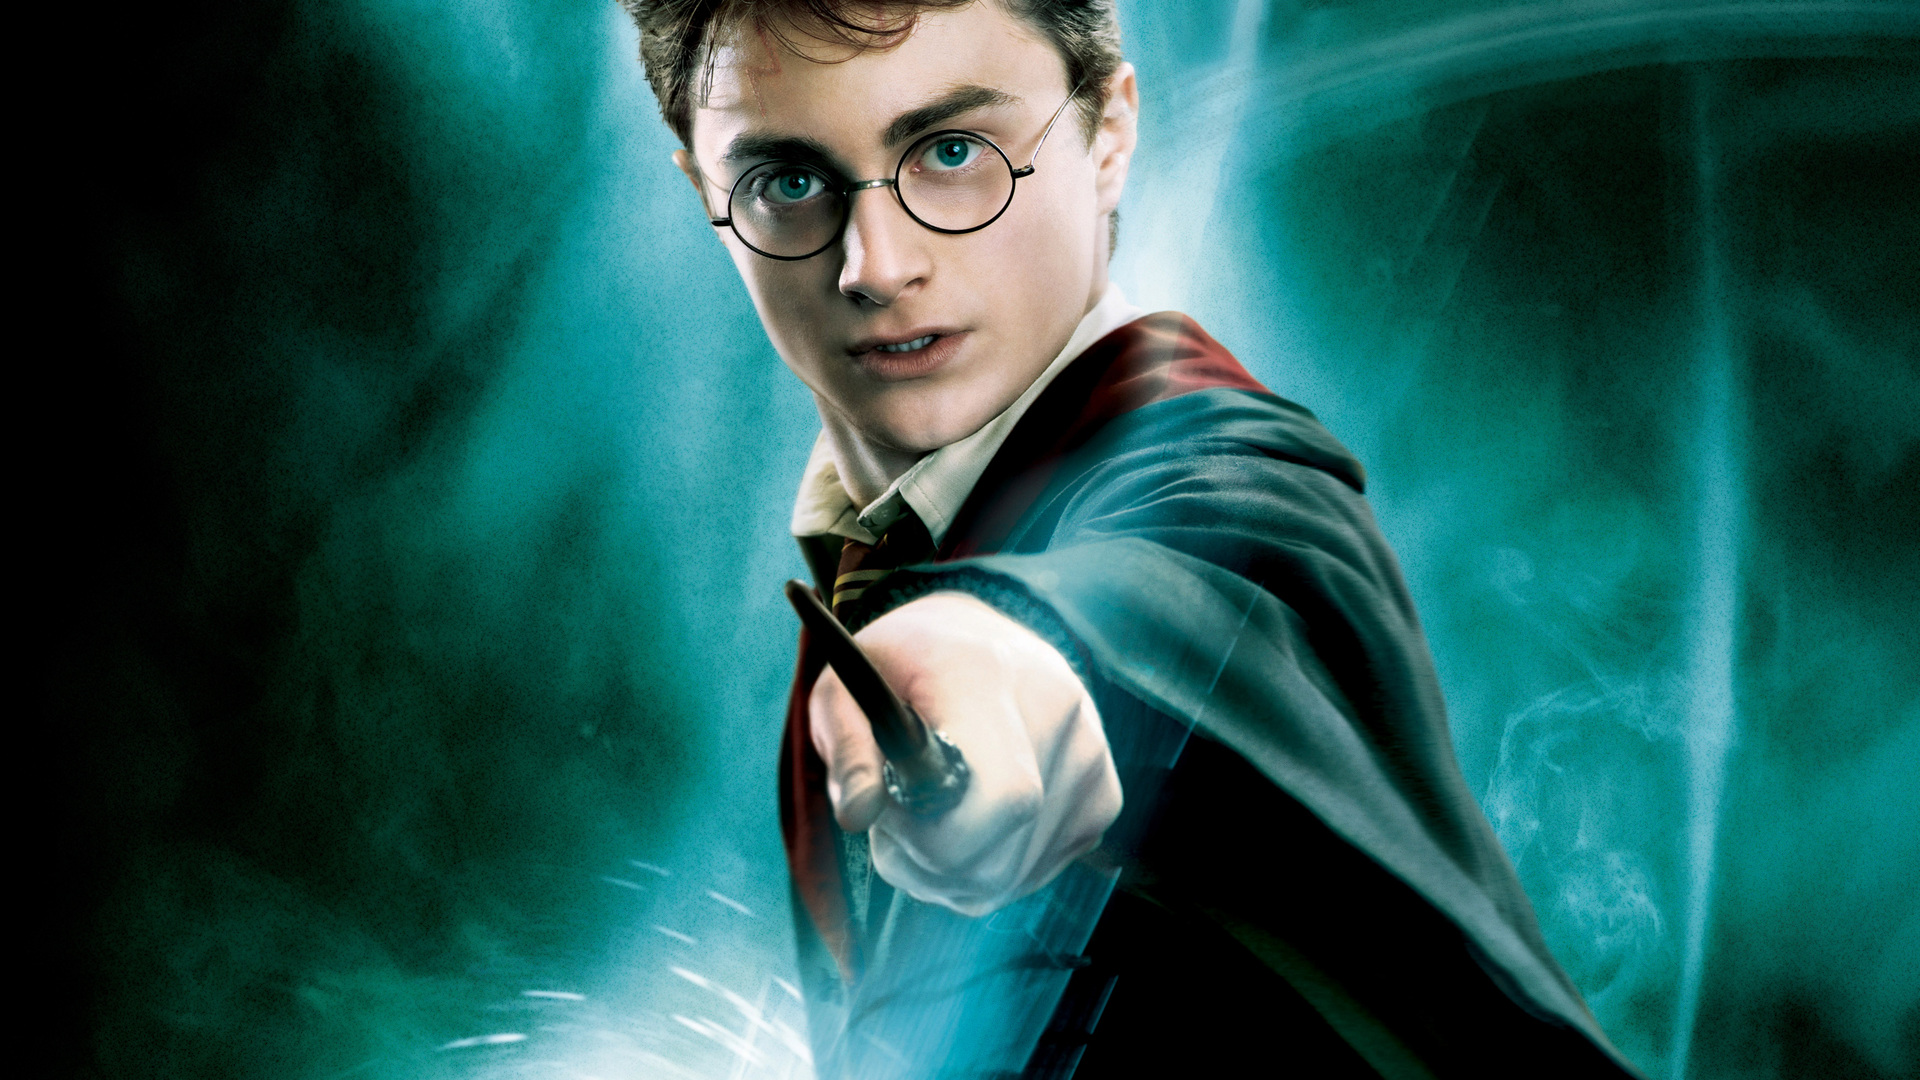 Harry Potter: Τα smartphone μπορούν να σας “μετατρέψουν” σε μάγους – ΒΙΝΤΕΟ